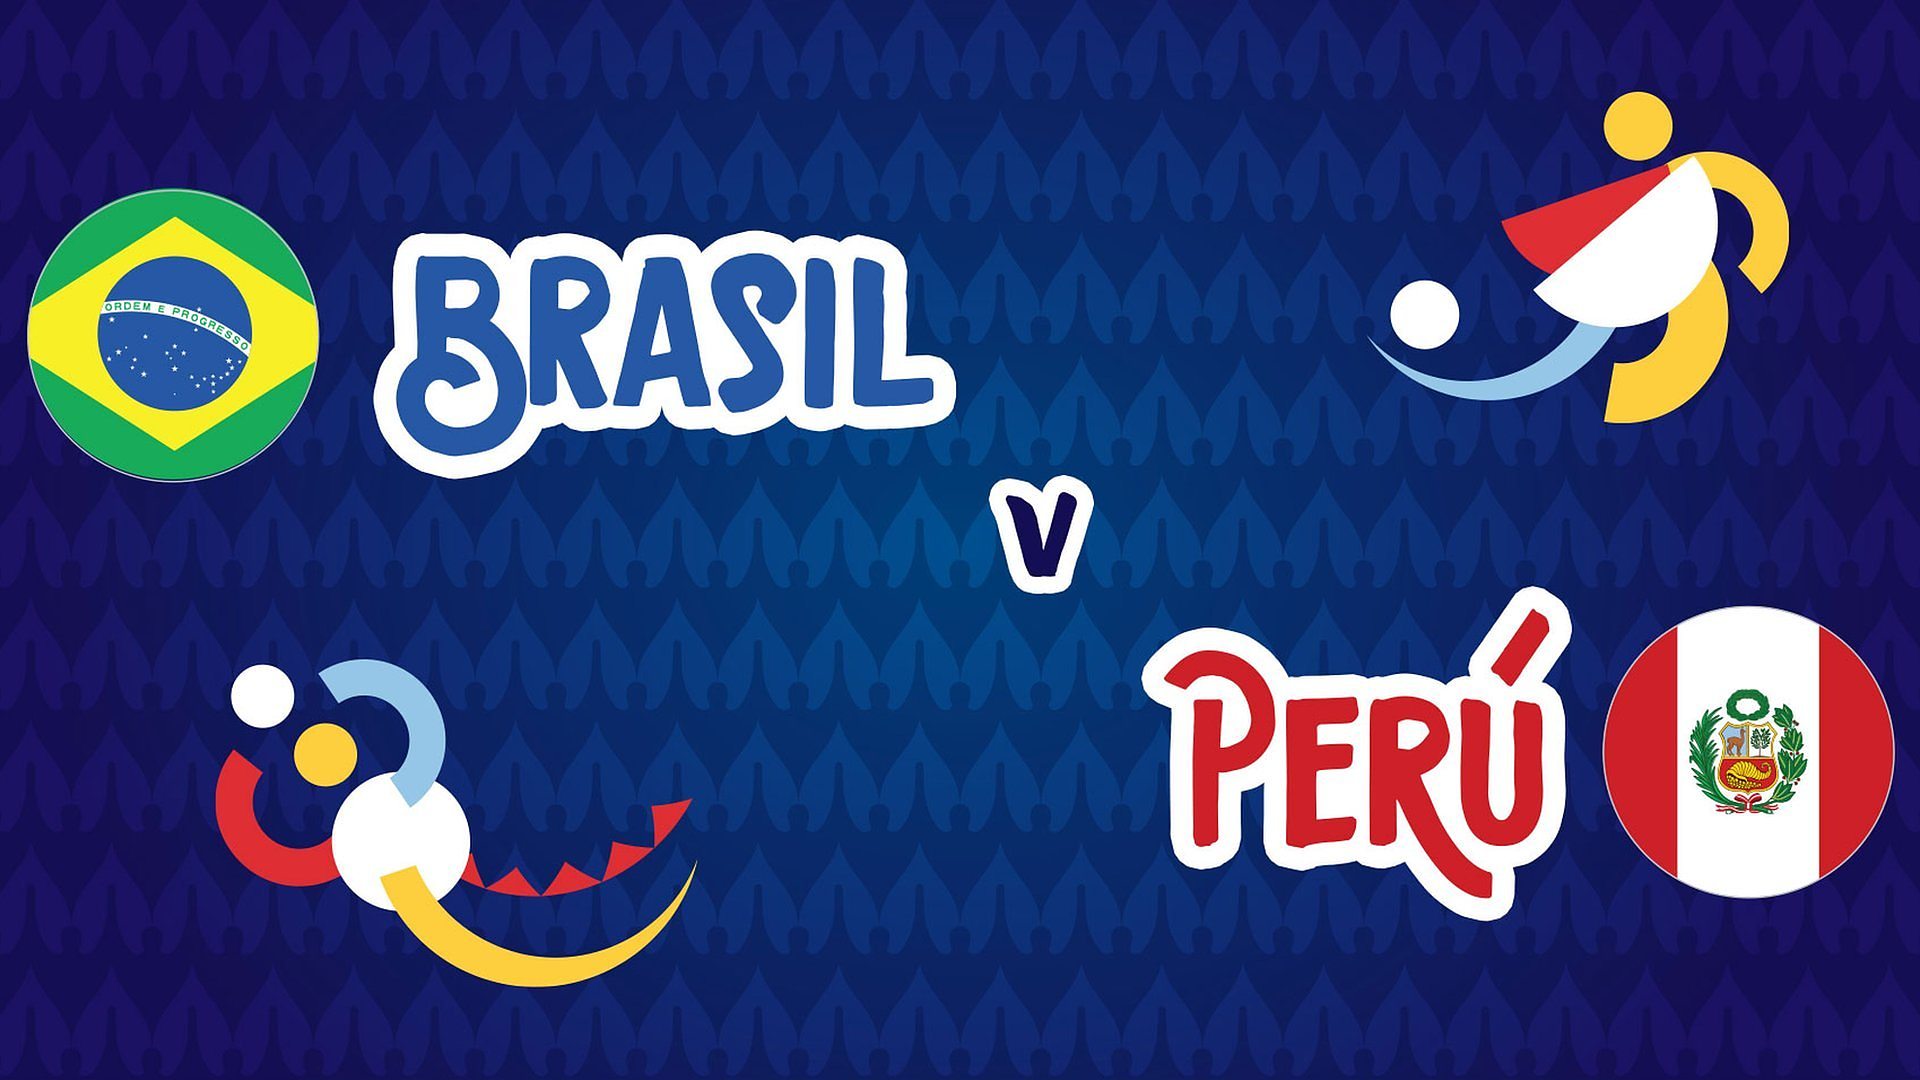 BBC iPlayer - Copa America - 2021: Brazil v Peru